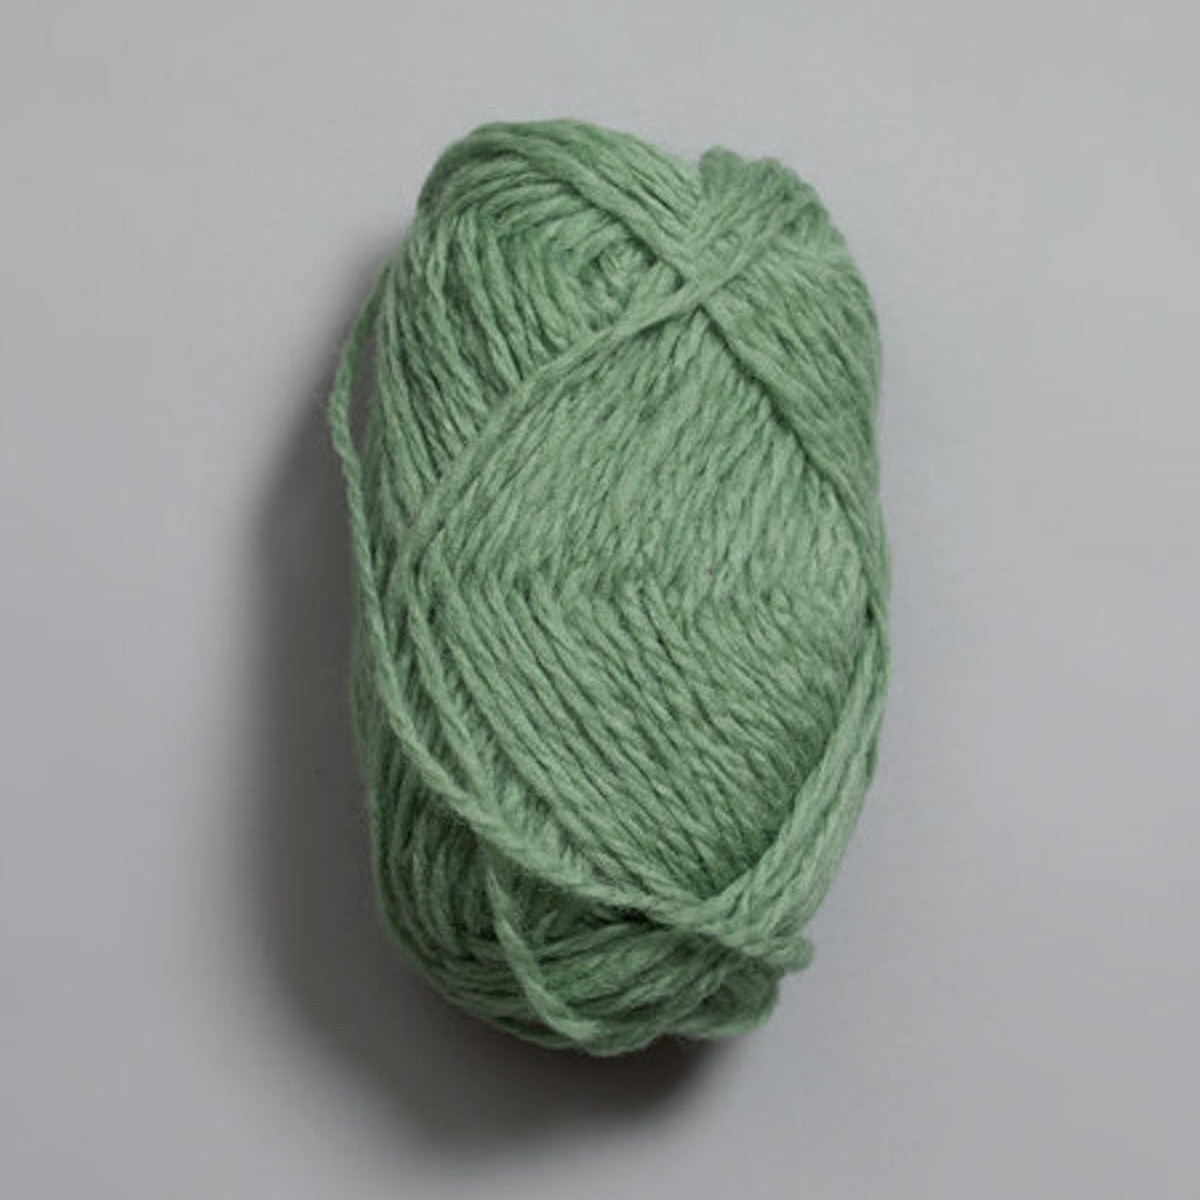 Vams - Jadegrønn / Jadegrün (107)